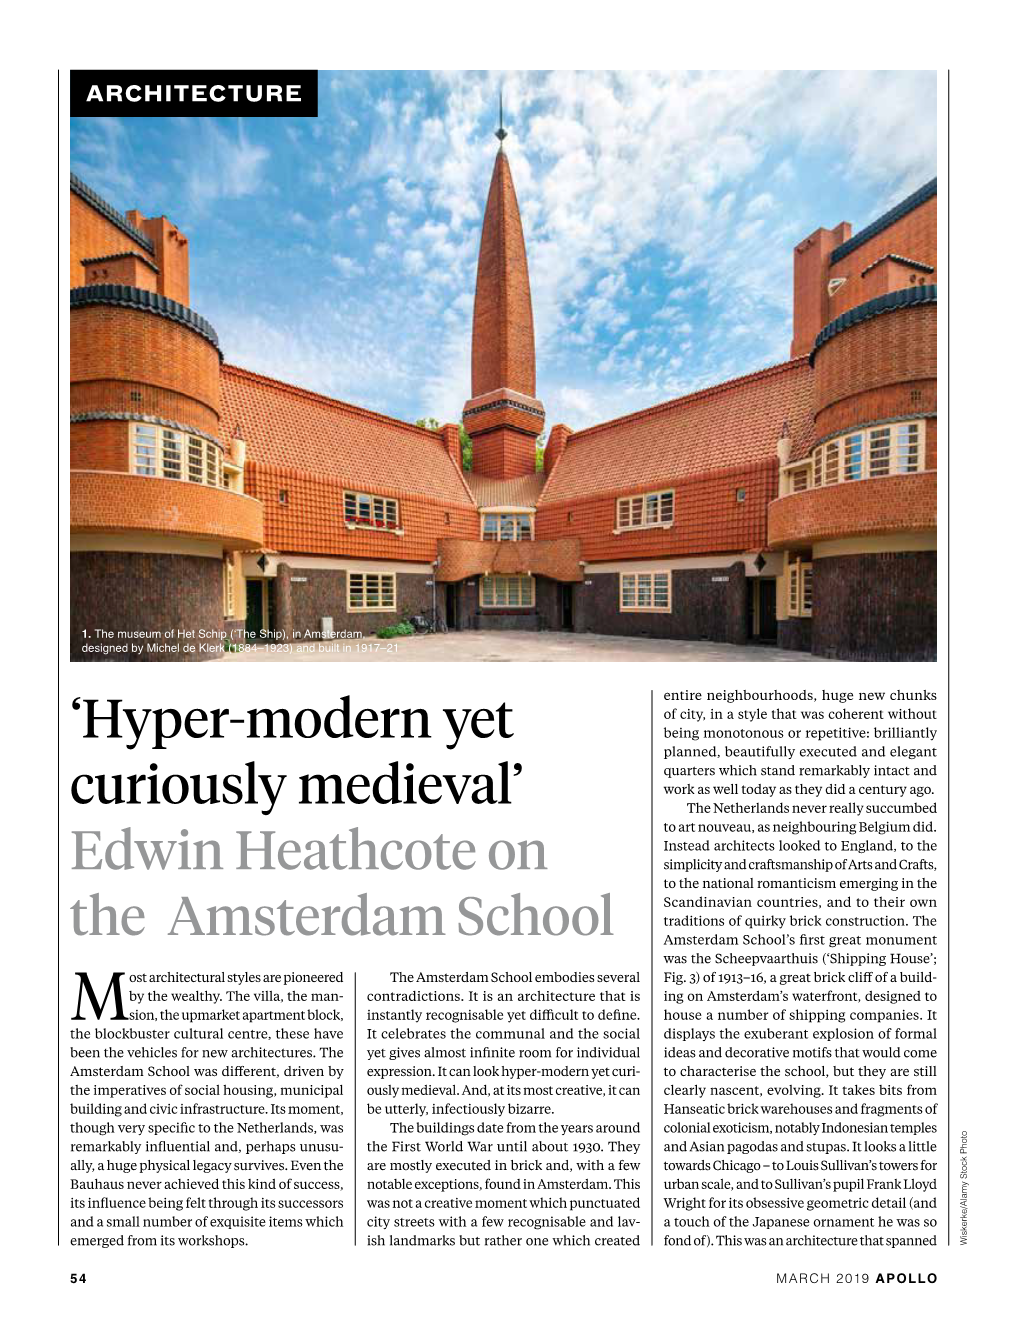 'Hyper-Modern Yet Curiously Medieval' Edwin Heathcote on the Amsterdam School